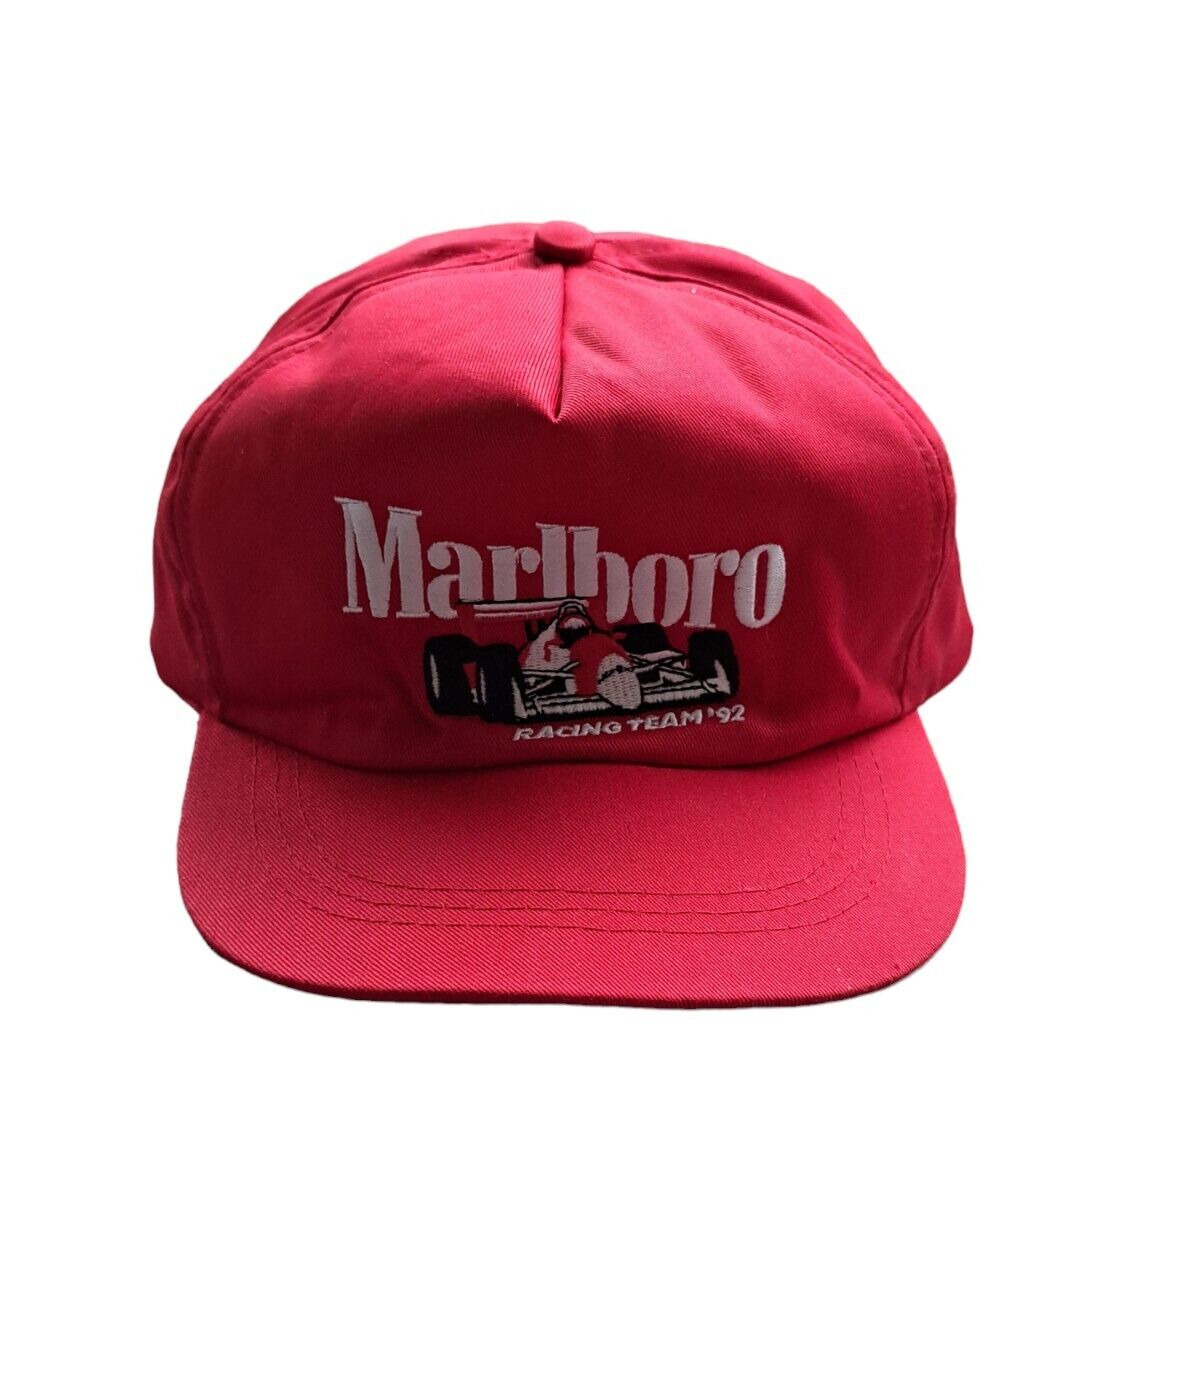 Vintage Marlboro Racing Team 1992 Snapback Hat Cap